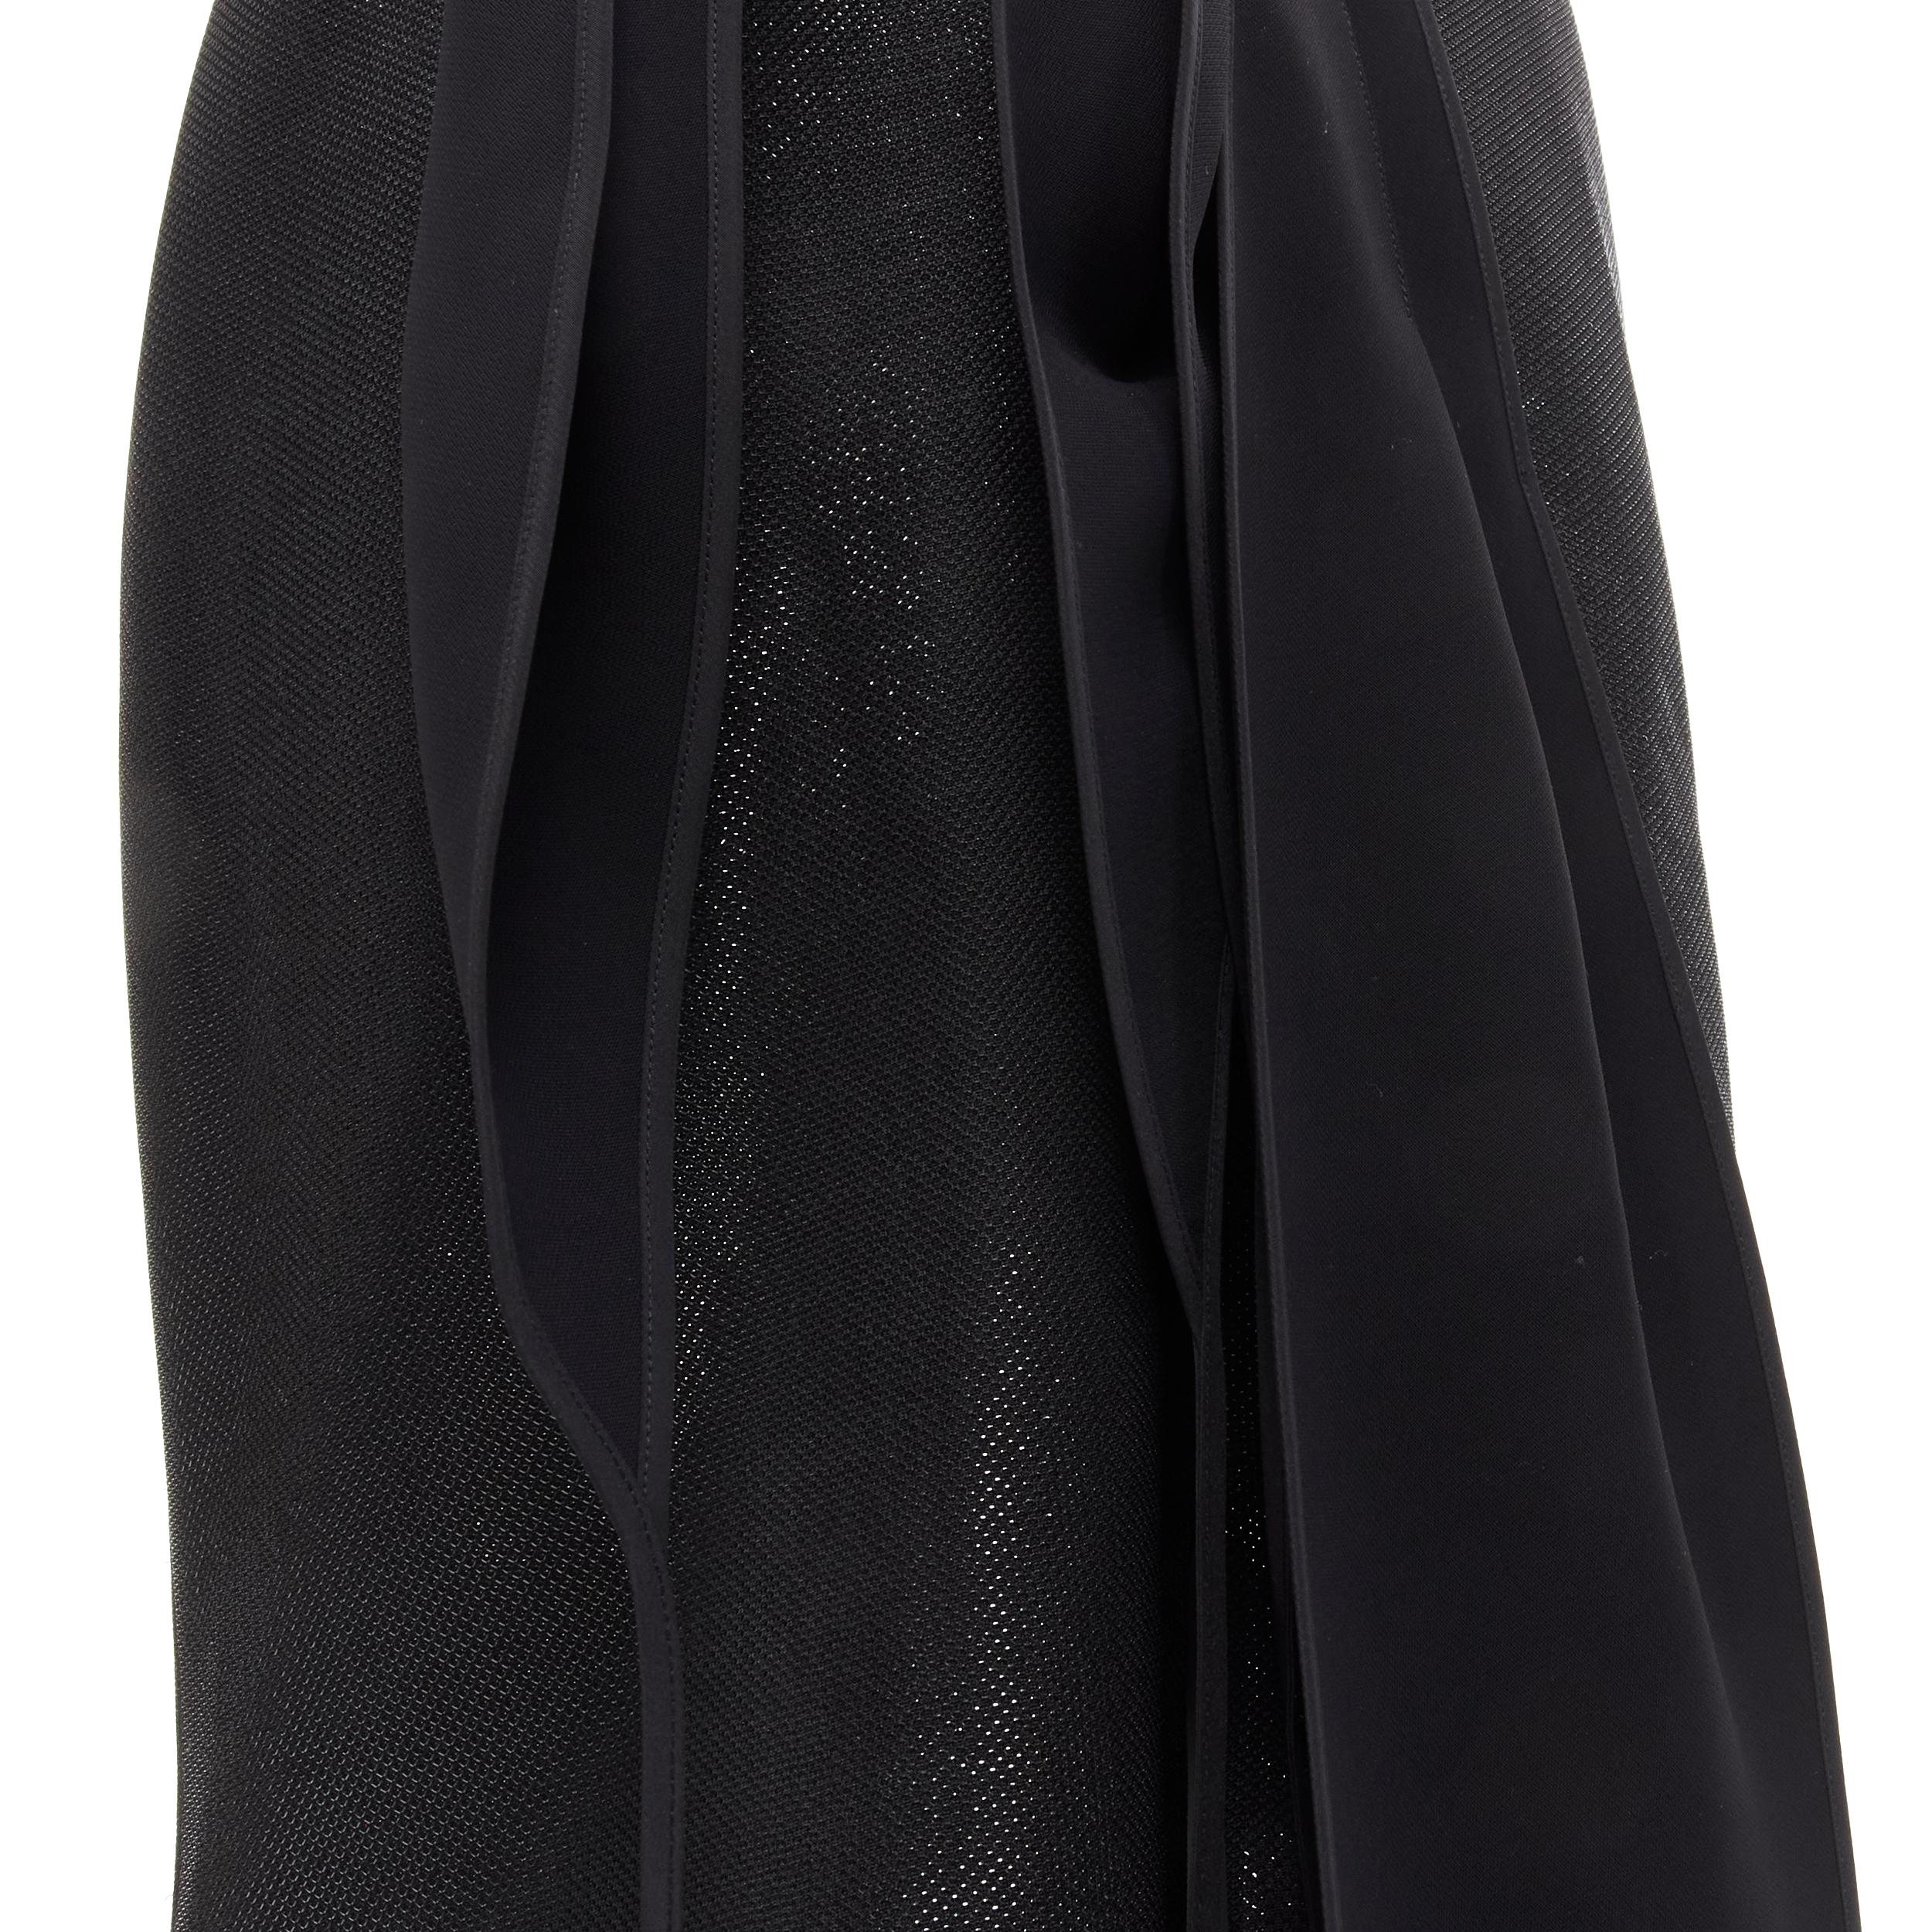 MATICEVSKI 2020 Runway Significant Gown black crisp halter cascade AUS10  S 2